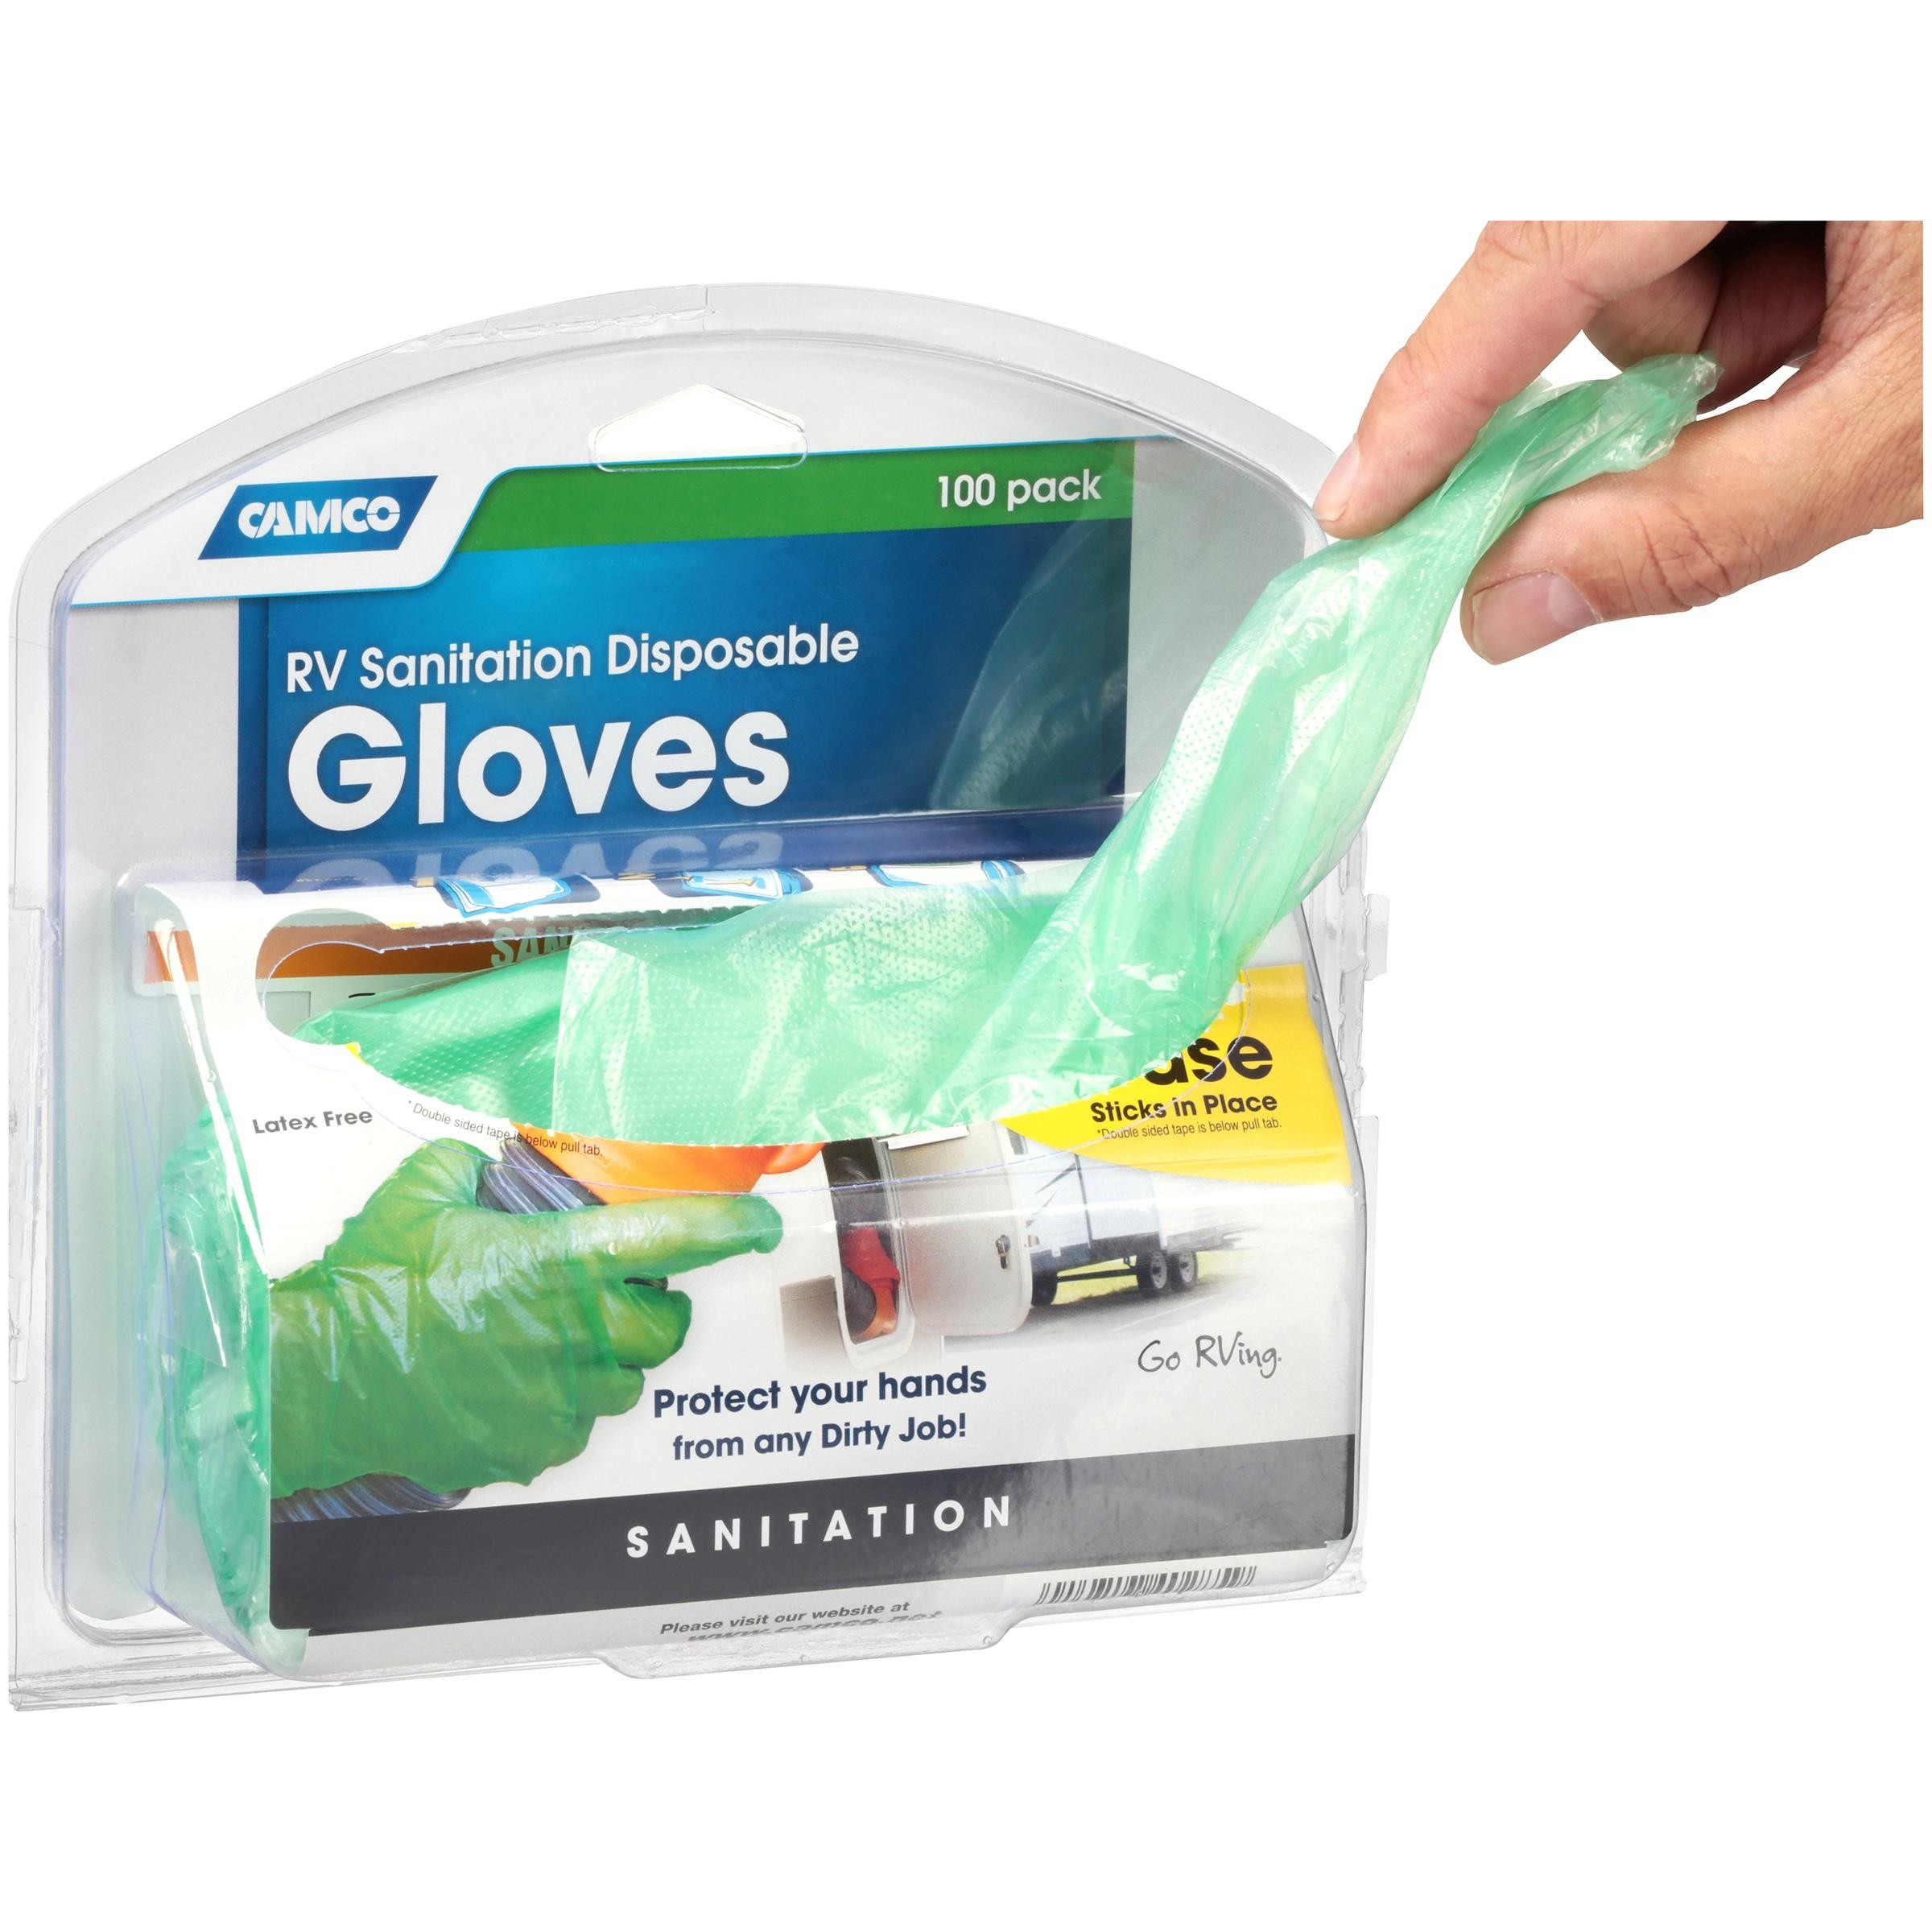 Camco RV Sanitation Disposable Gloves 100 Pk